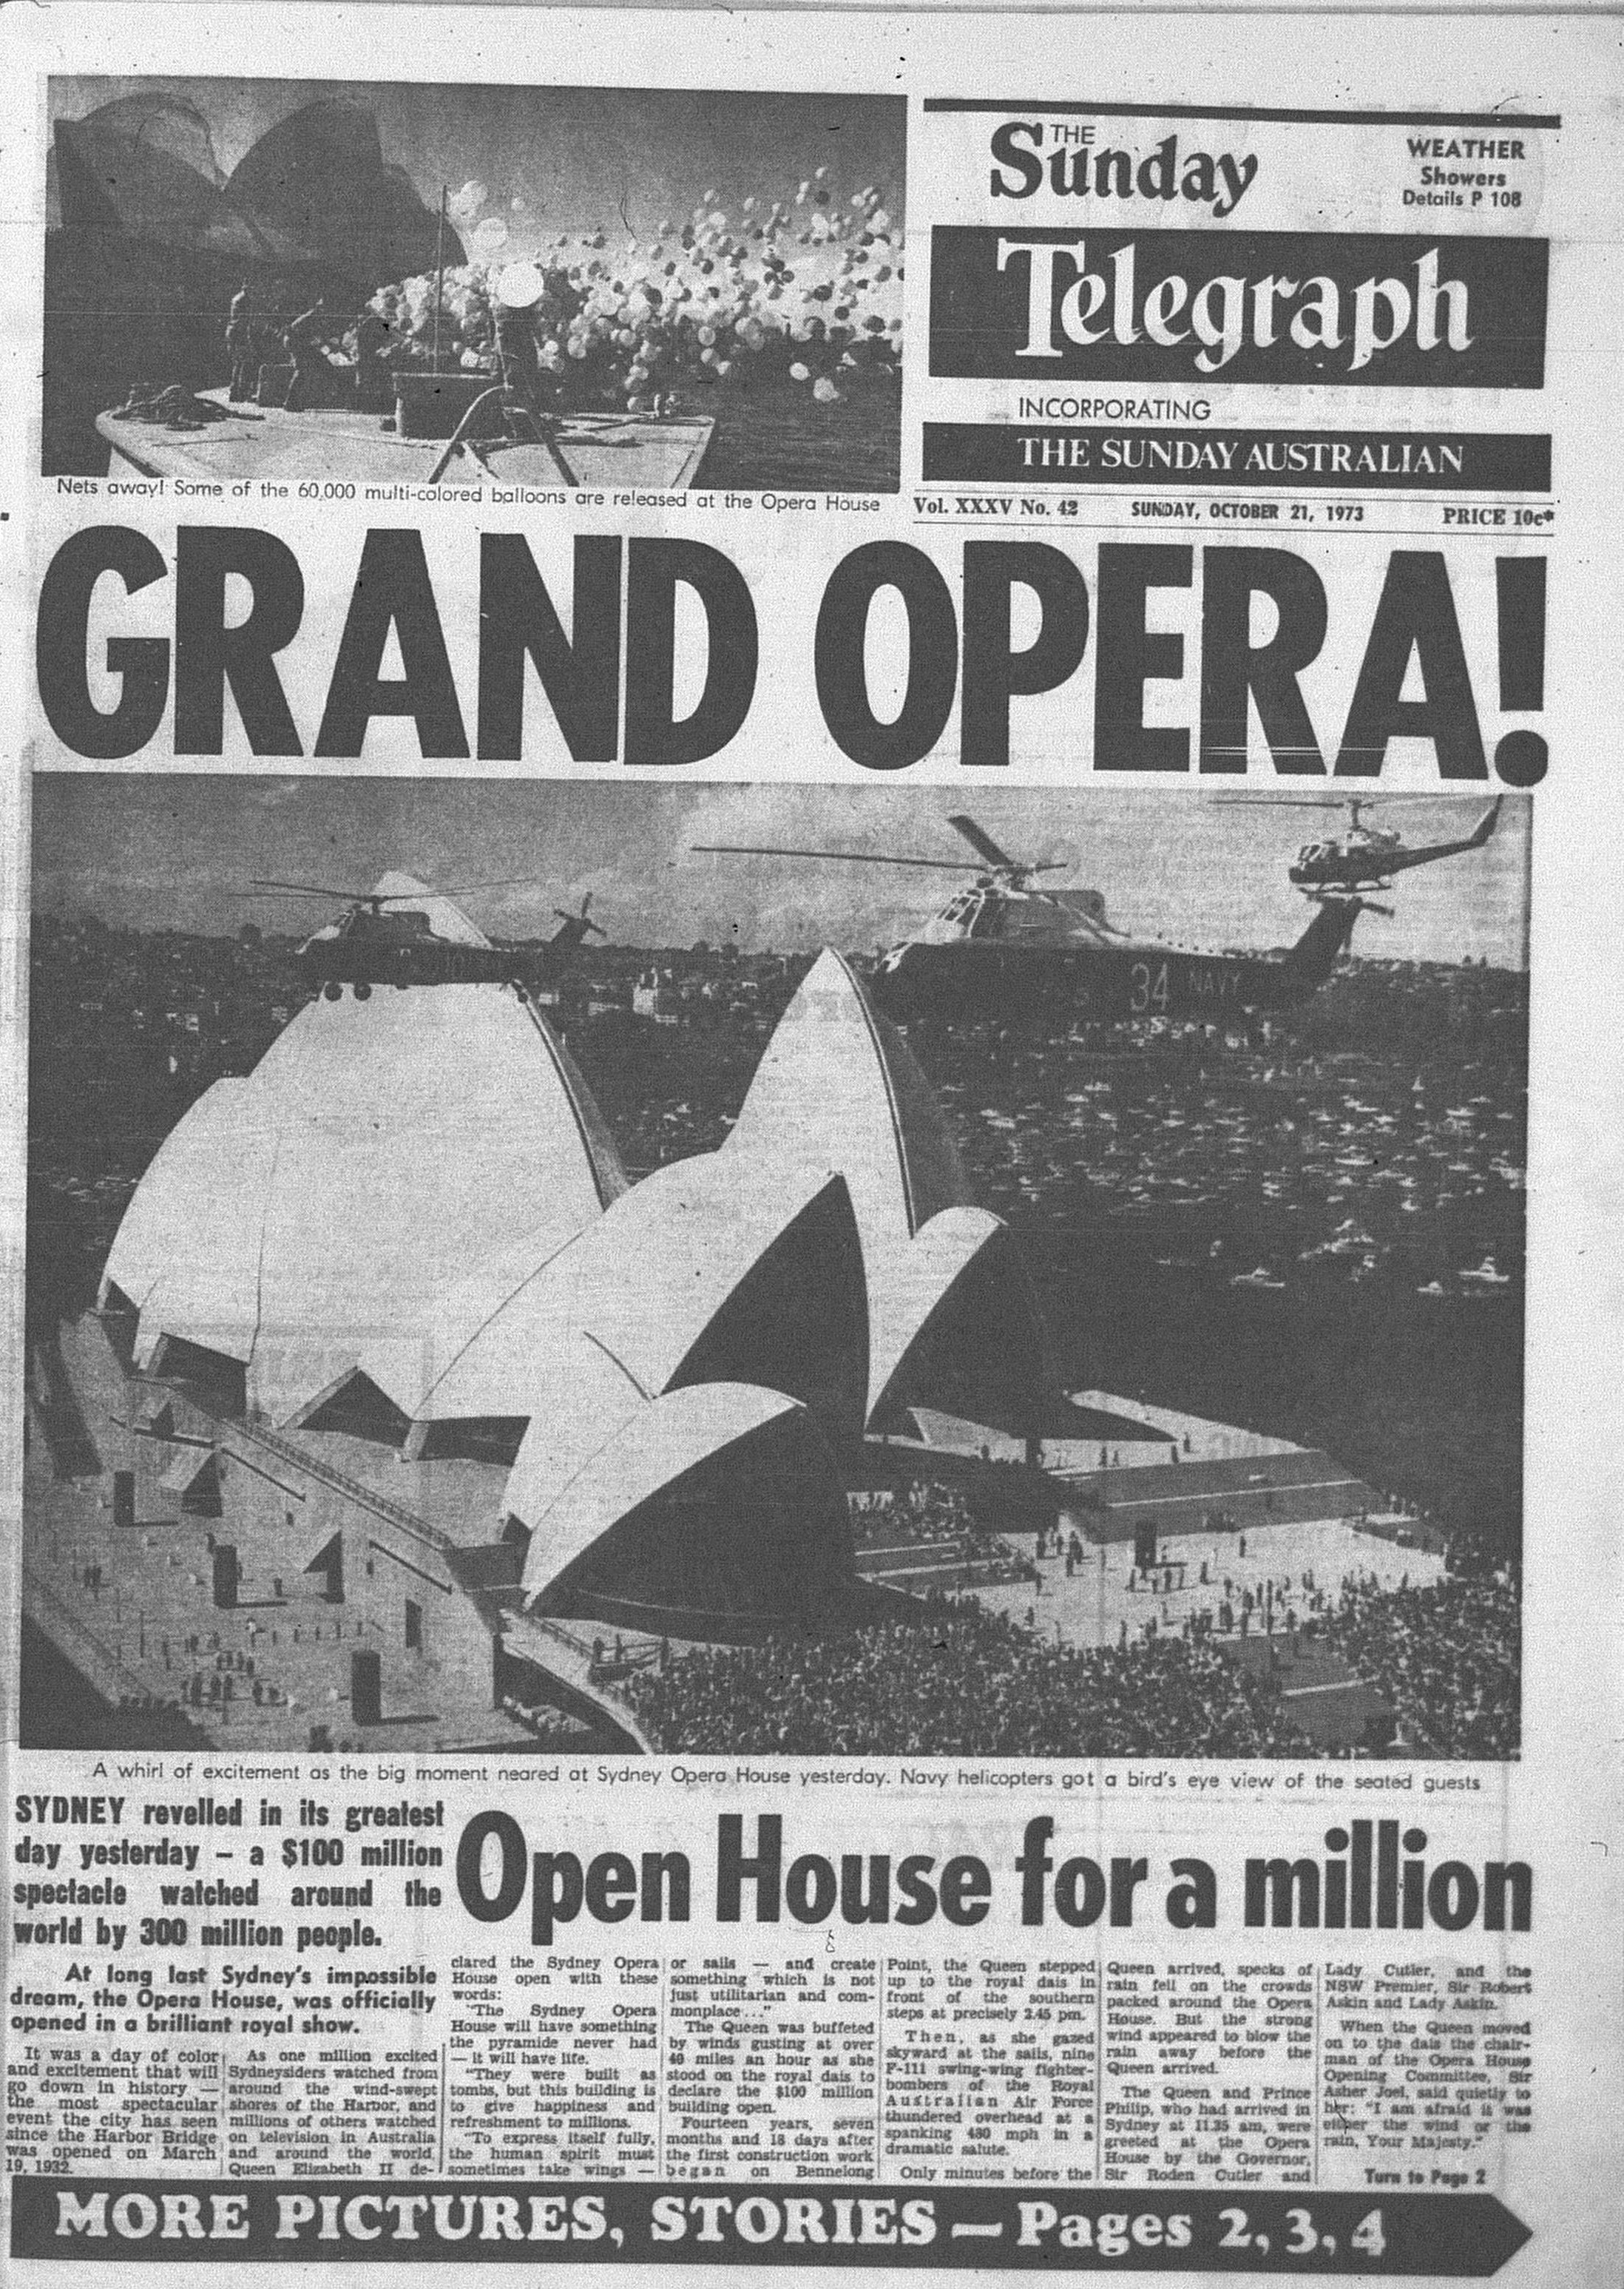 Sydney Opera House October 21 1973 sunday telegraph (17)A